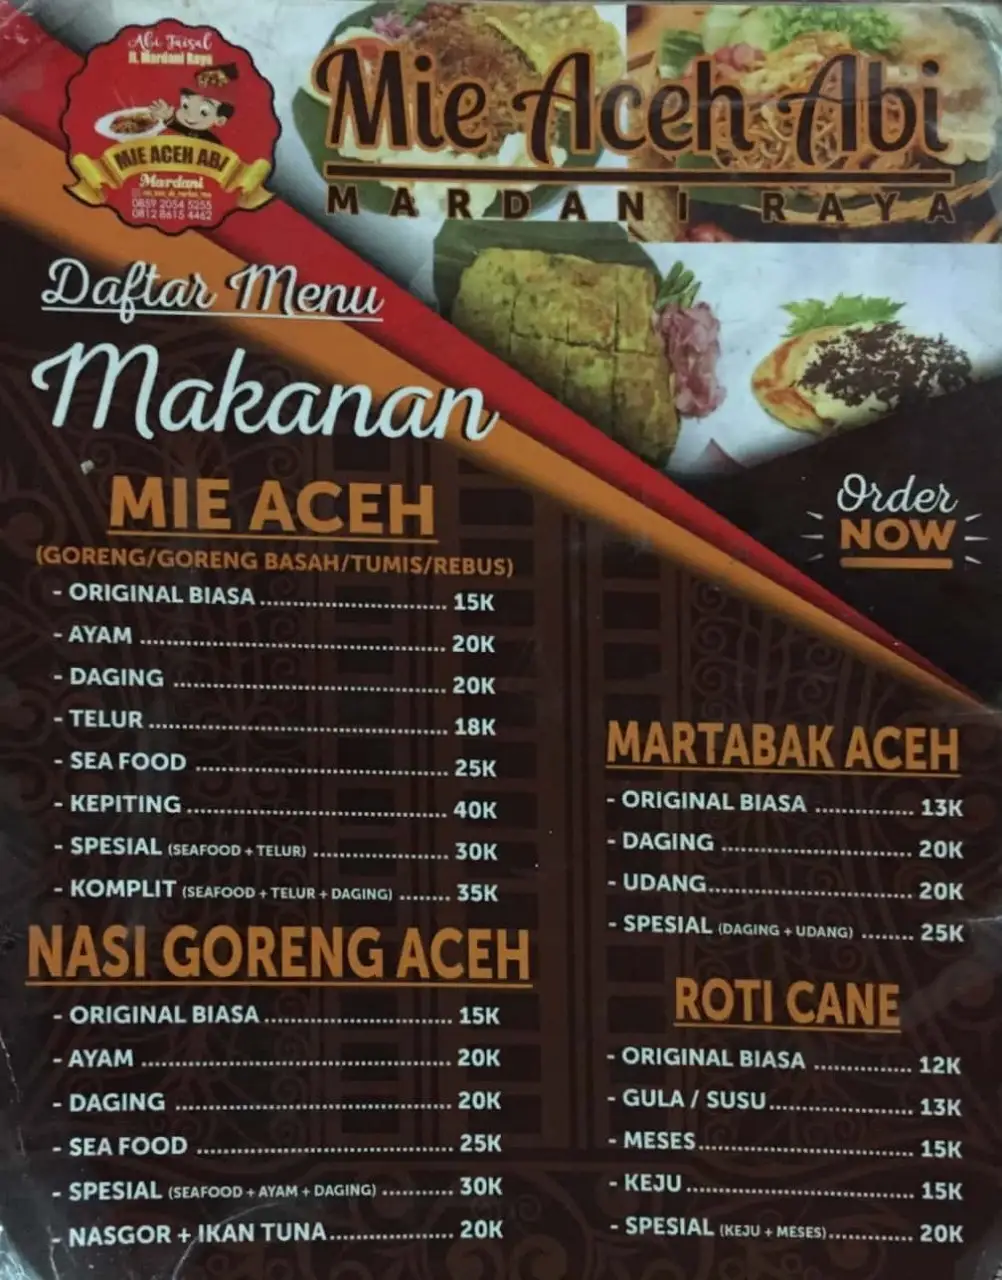 Mie Aceh Abi Mardani